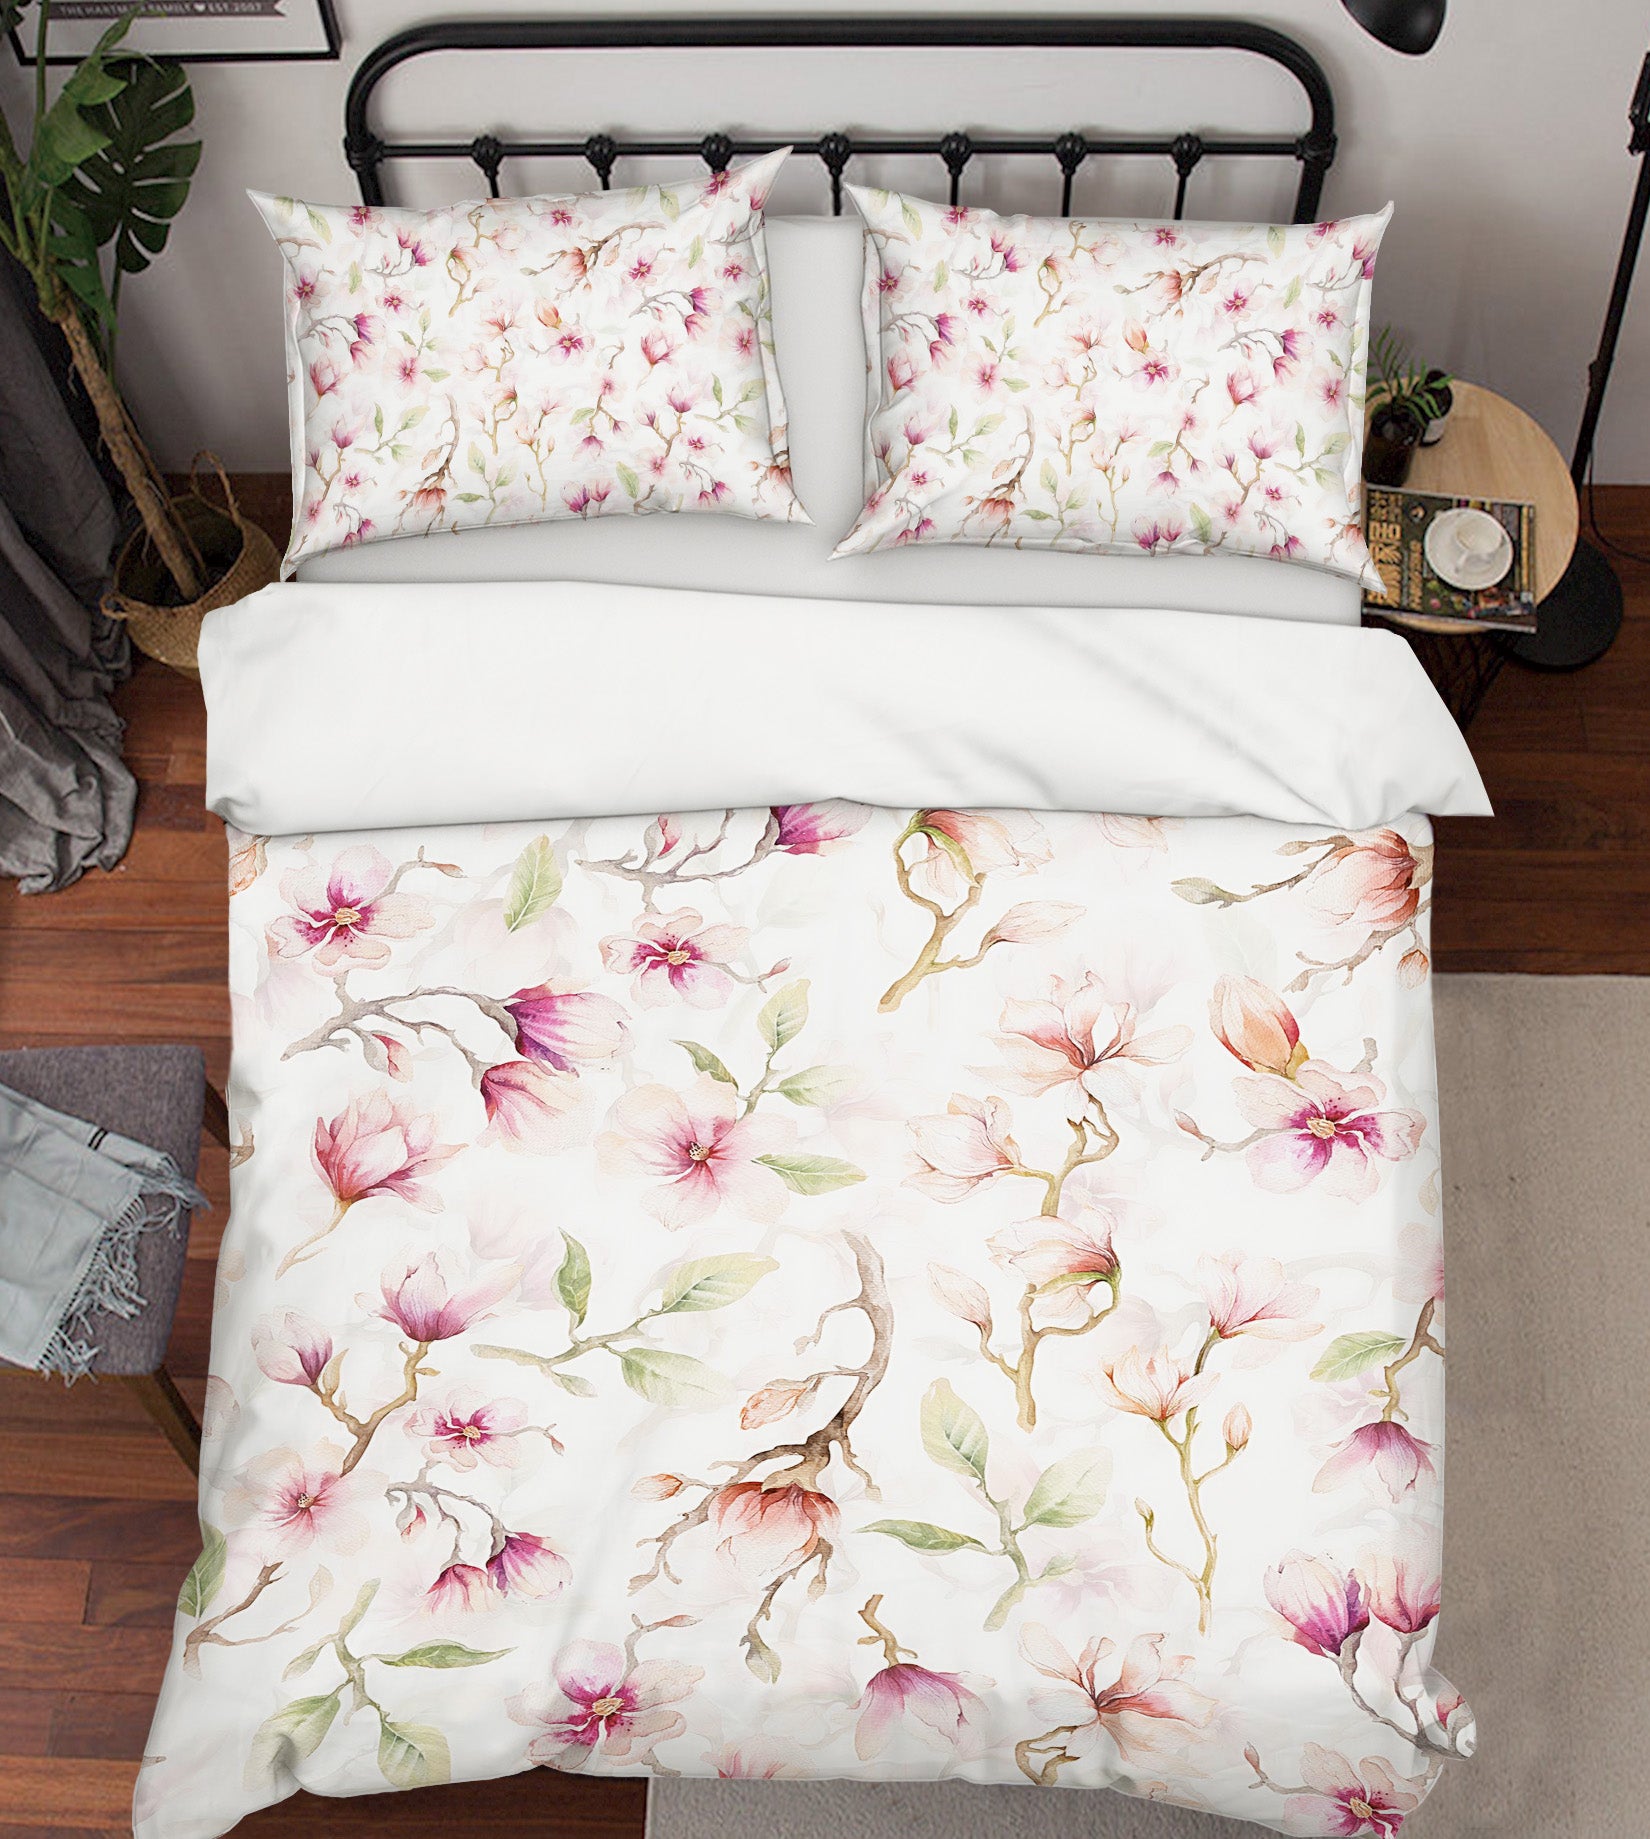 3D Lily Leaves 081 Uta Naumann Bedding Bed Pillowcases Quilt